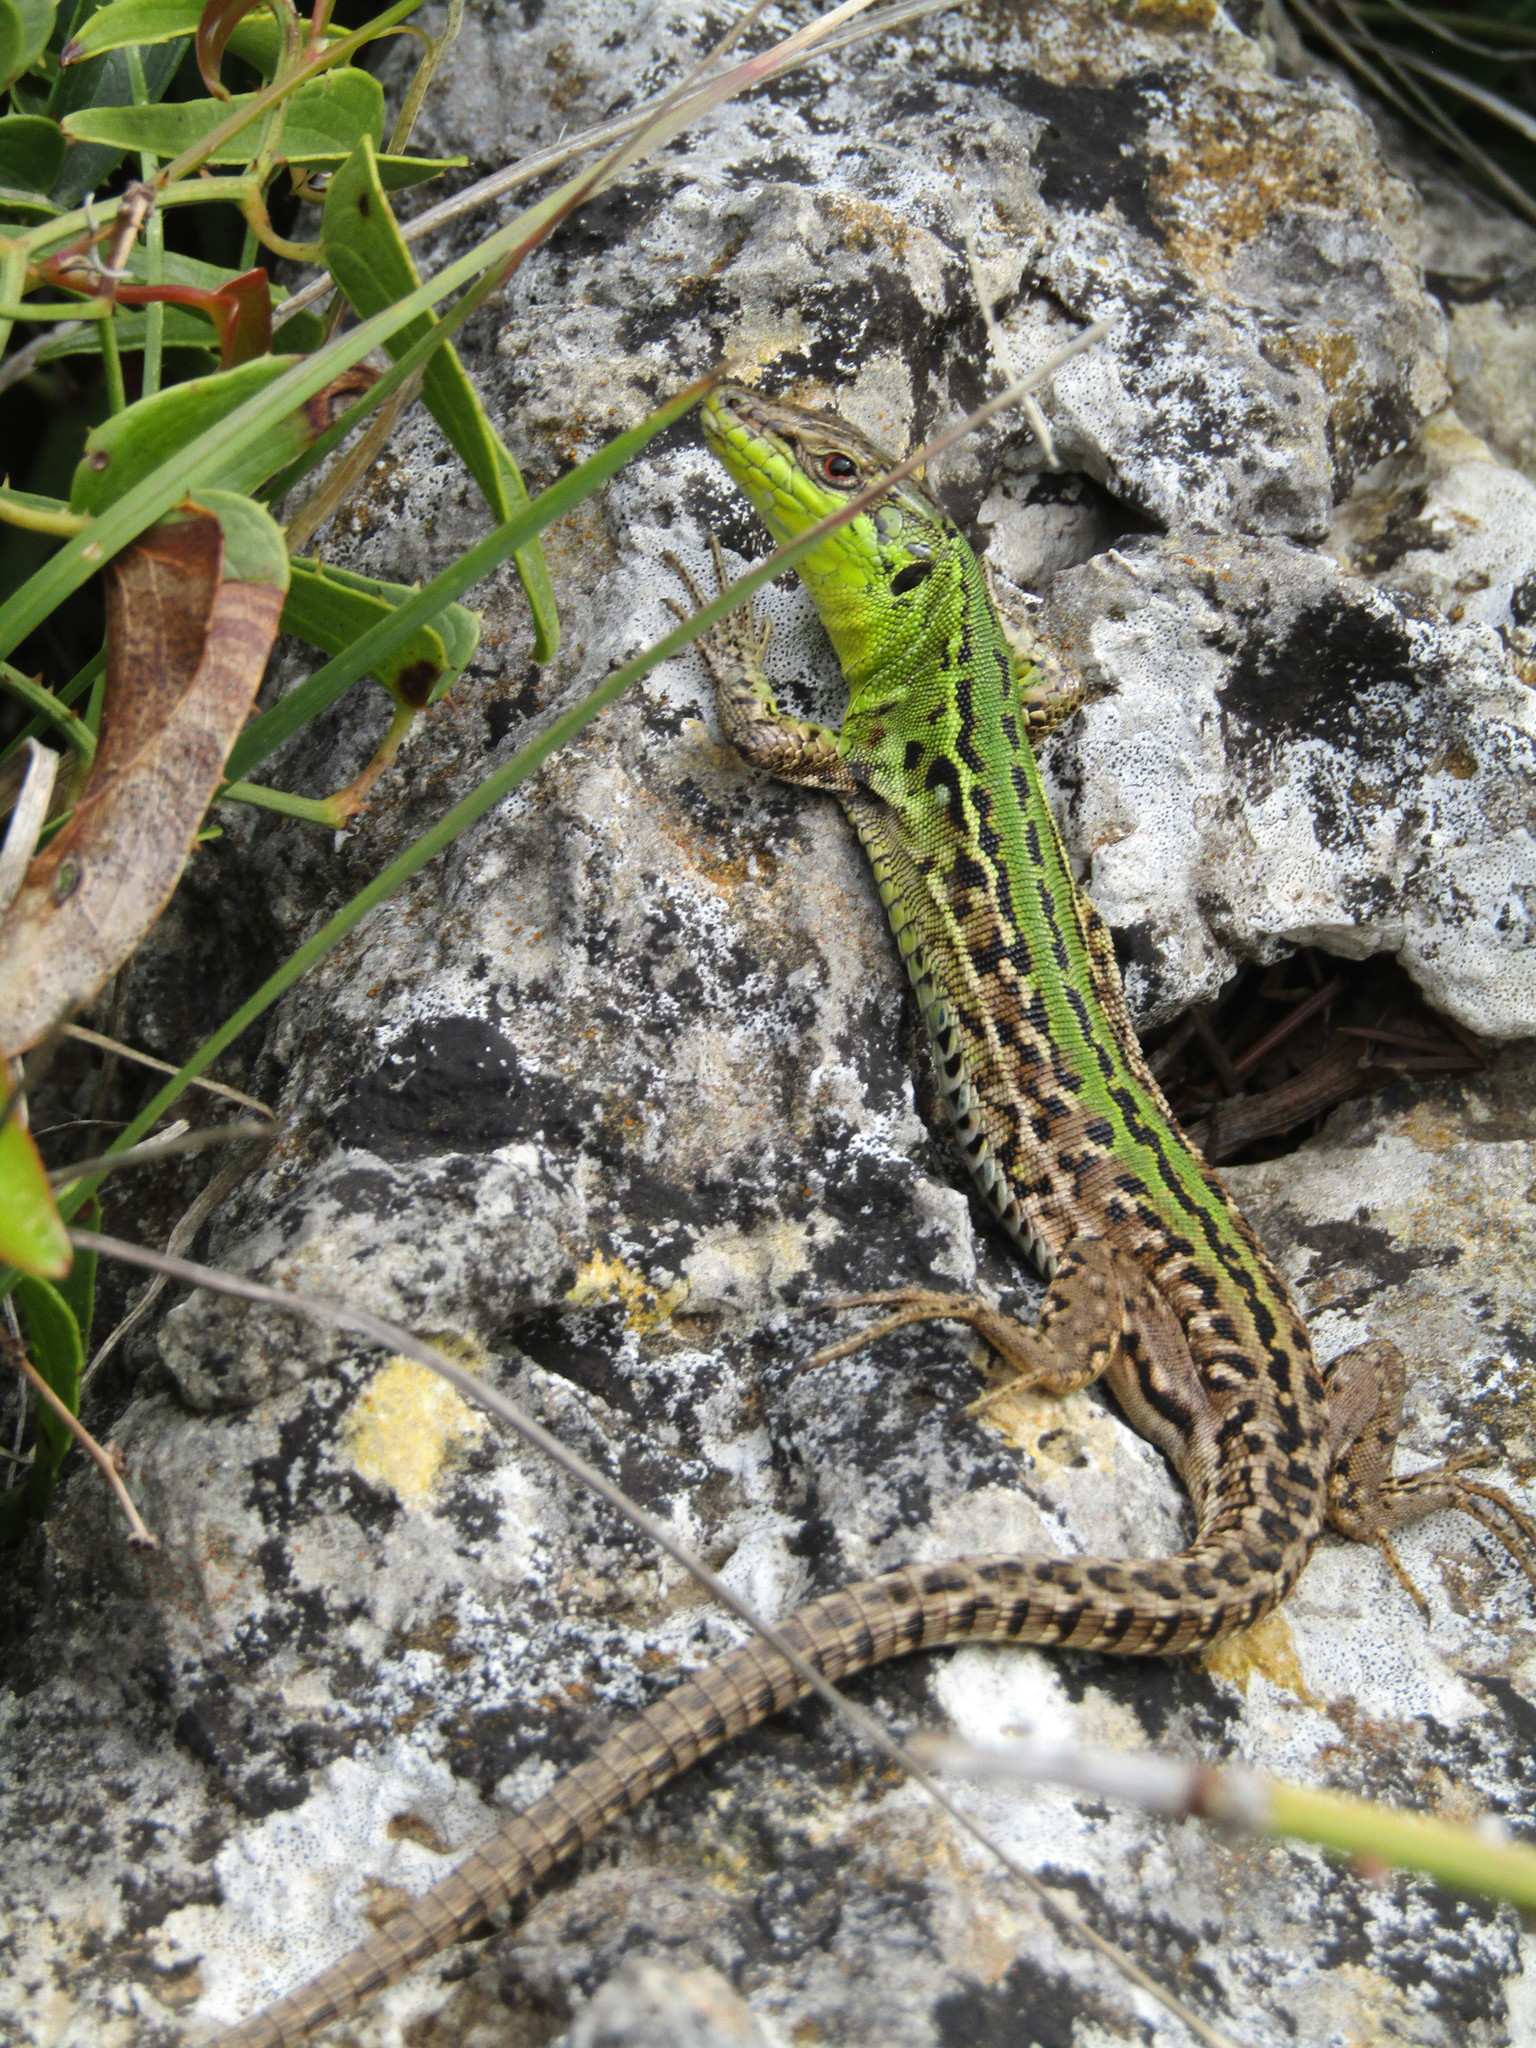 Southern Italian Wall Lizard - Podarcis siculus siculus